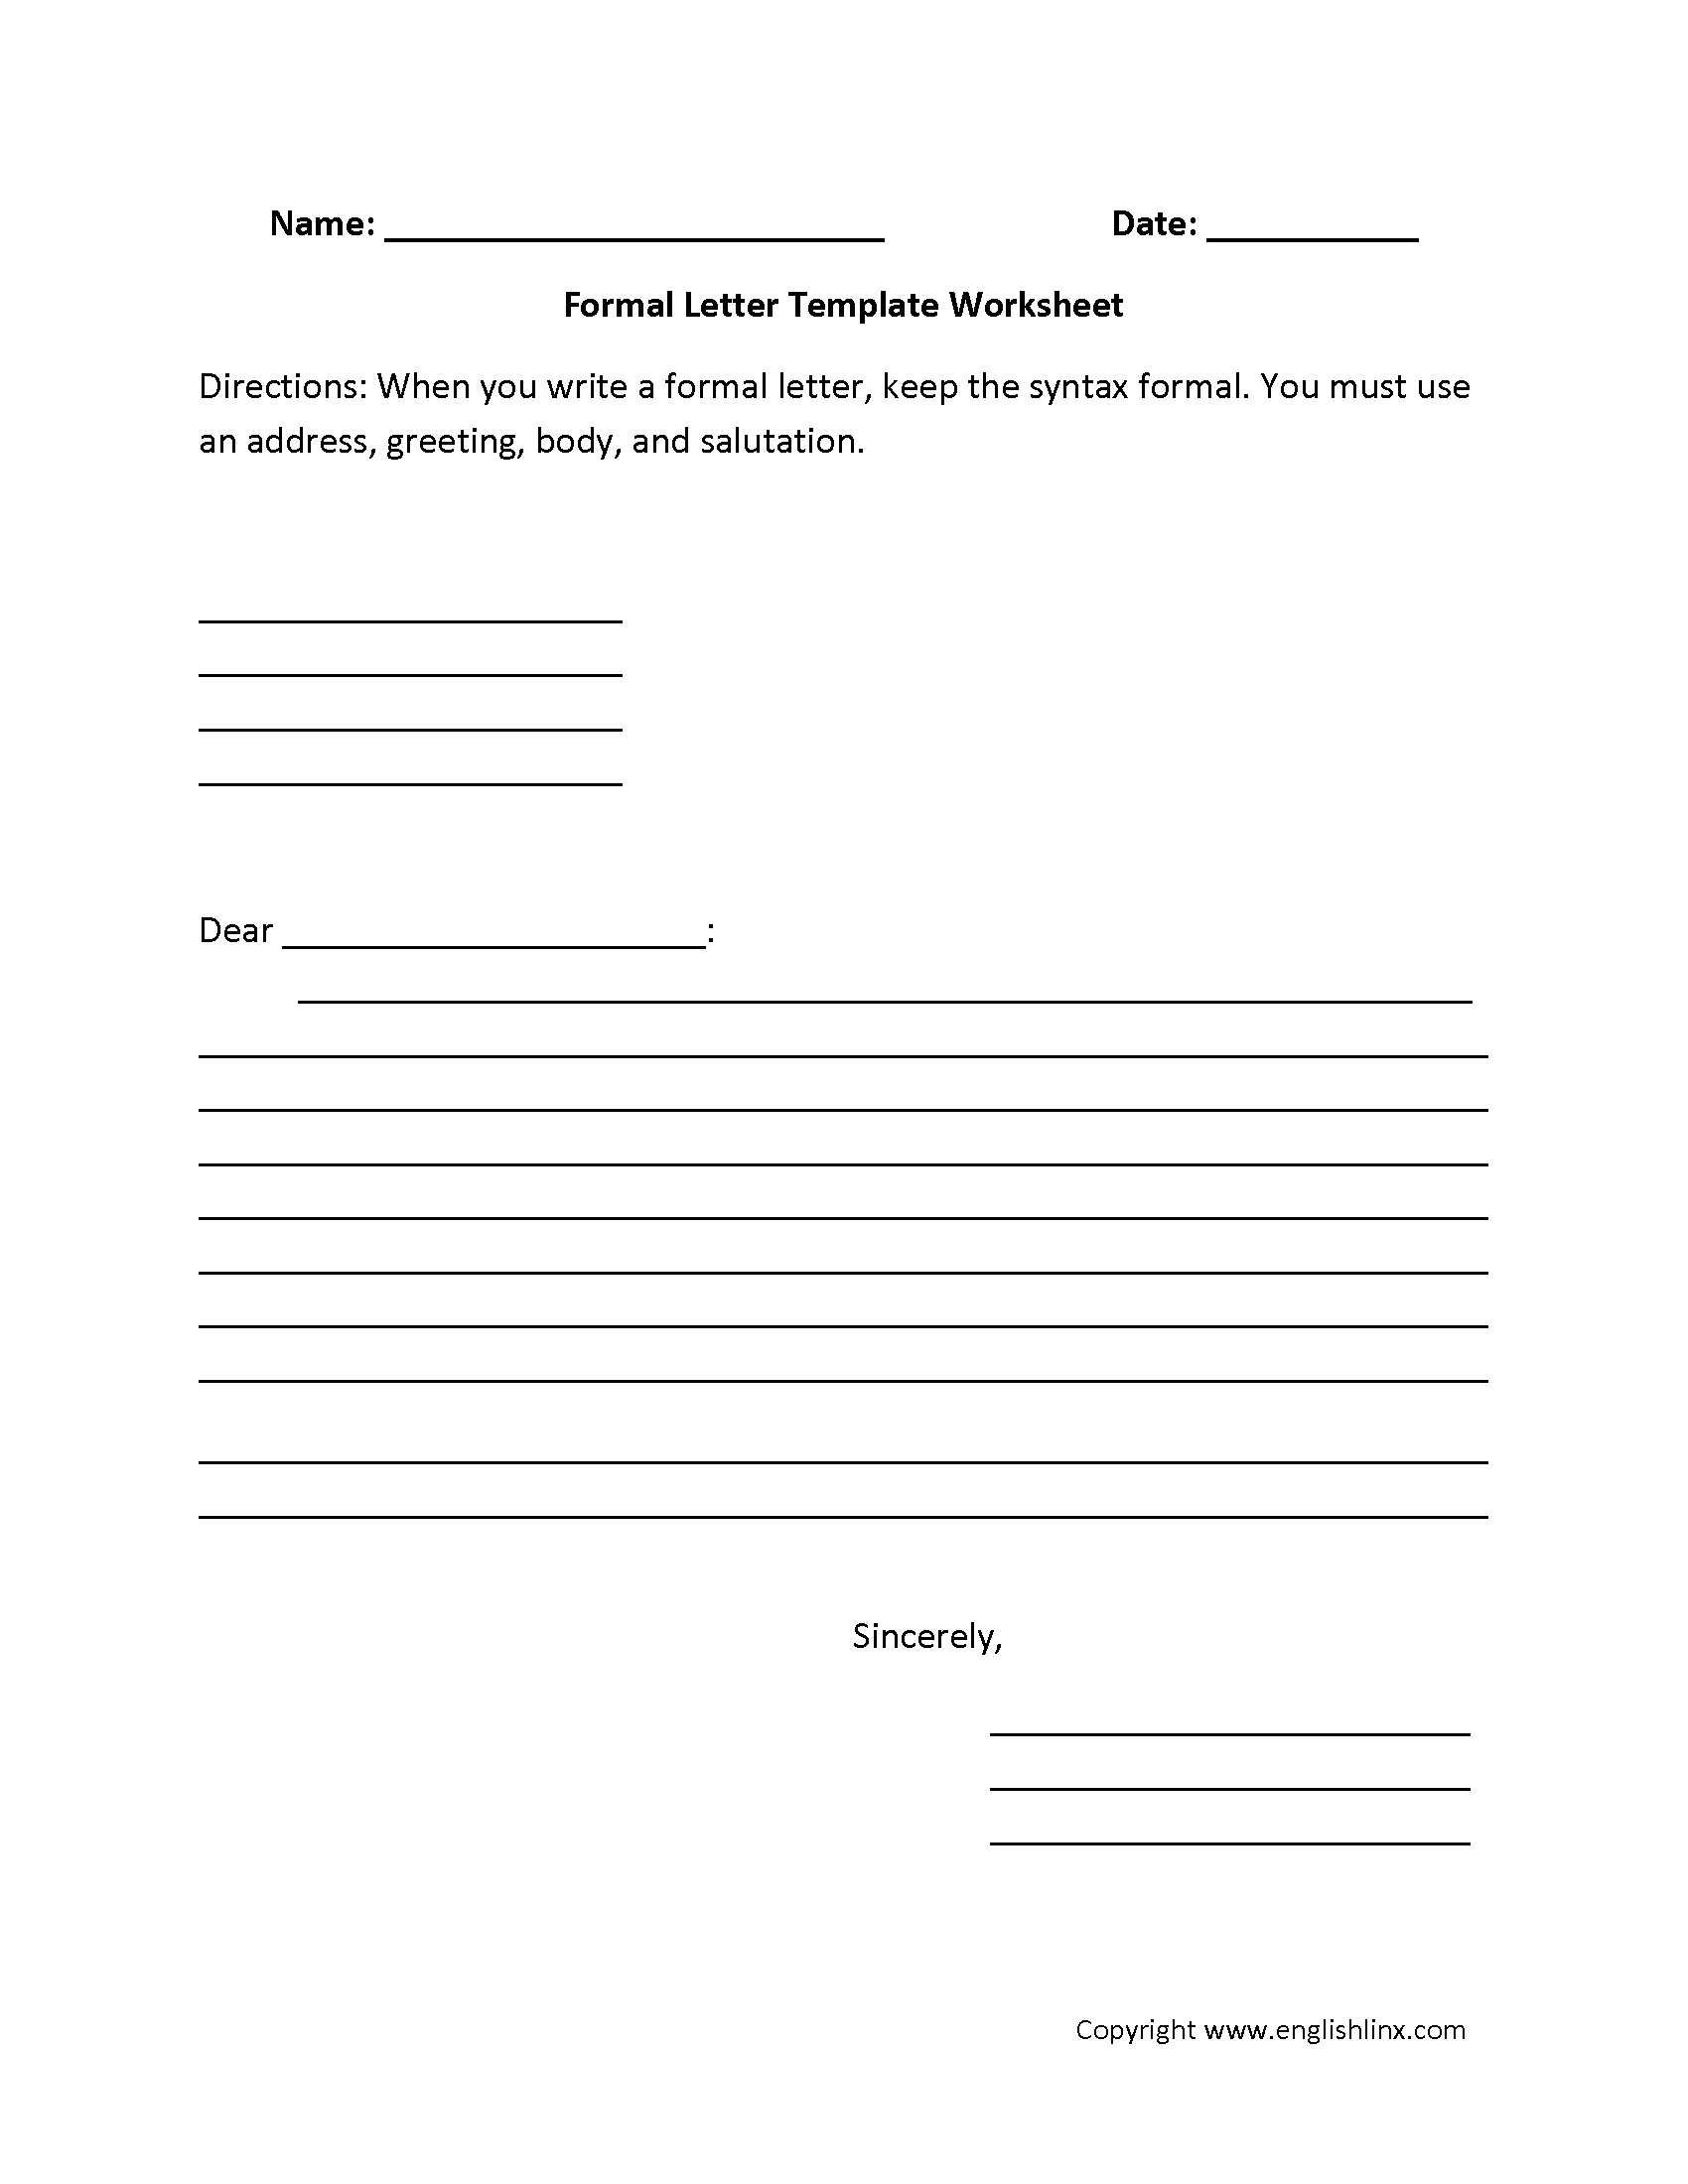 Letter Writing Worksheets | Formal Letter Writing Worksheets regarding Letter Writing Worksheets For Grade 5